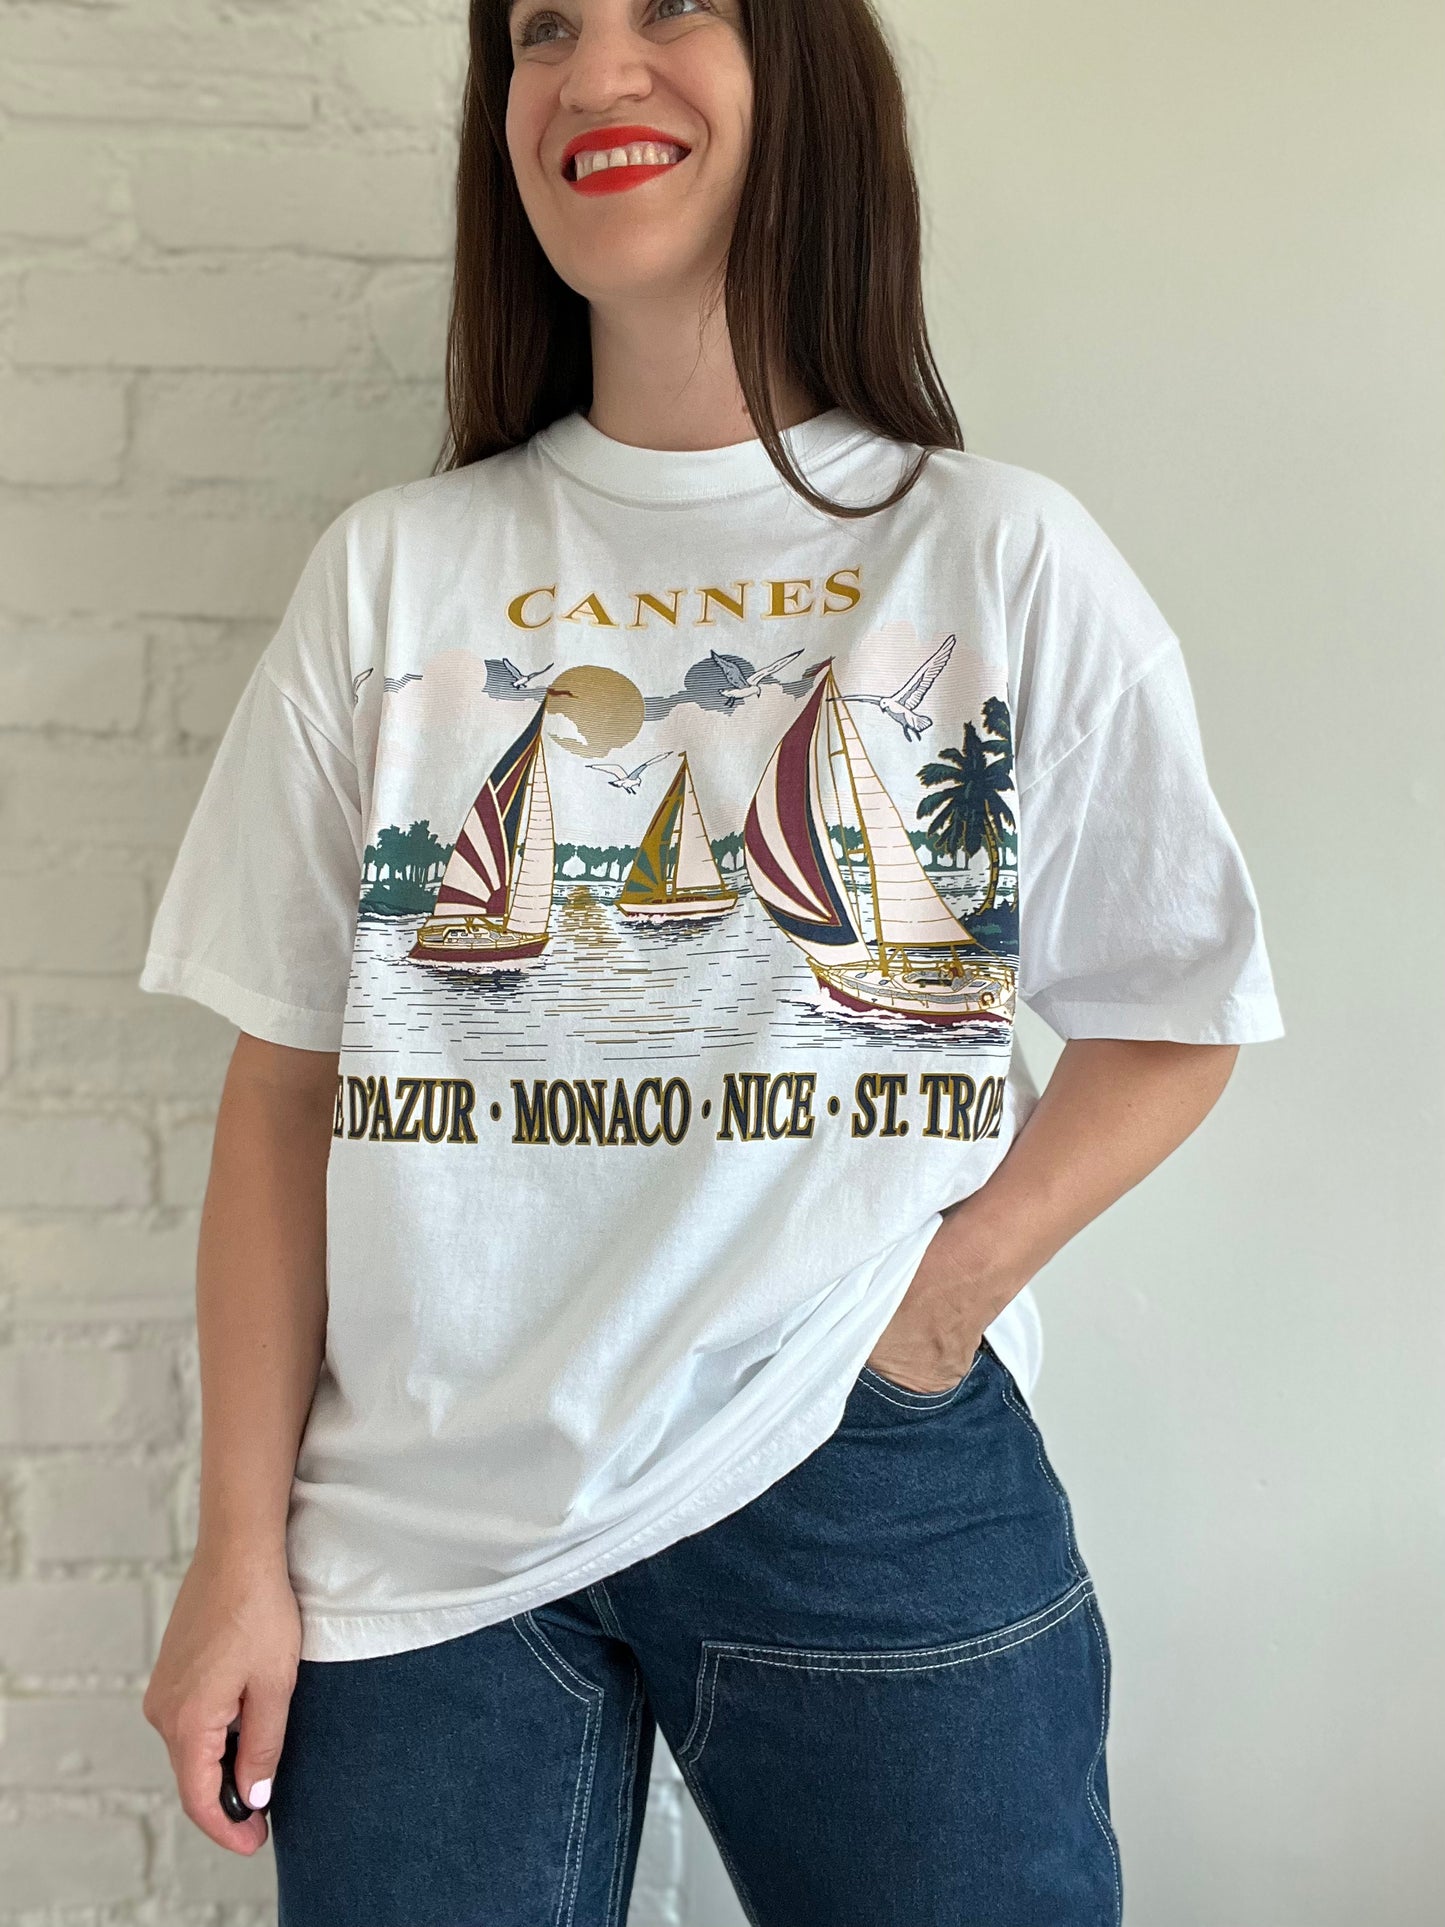 Cannes Southern France Sailing T-Shirt - XL/XXL